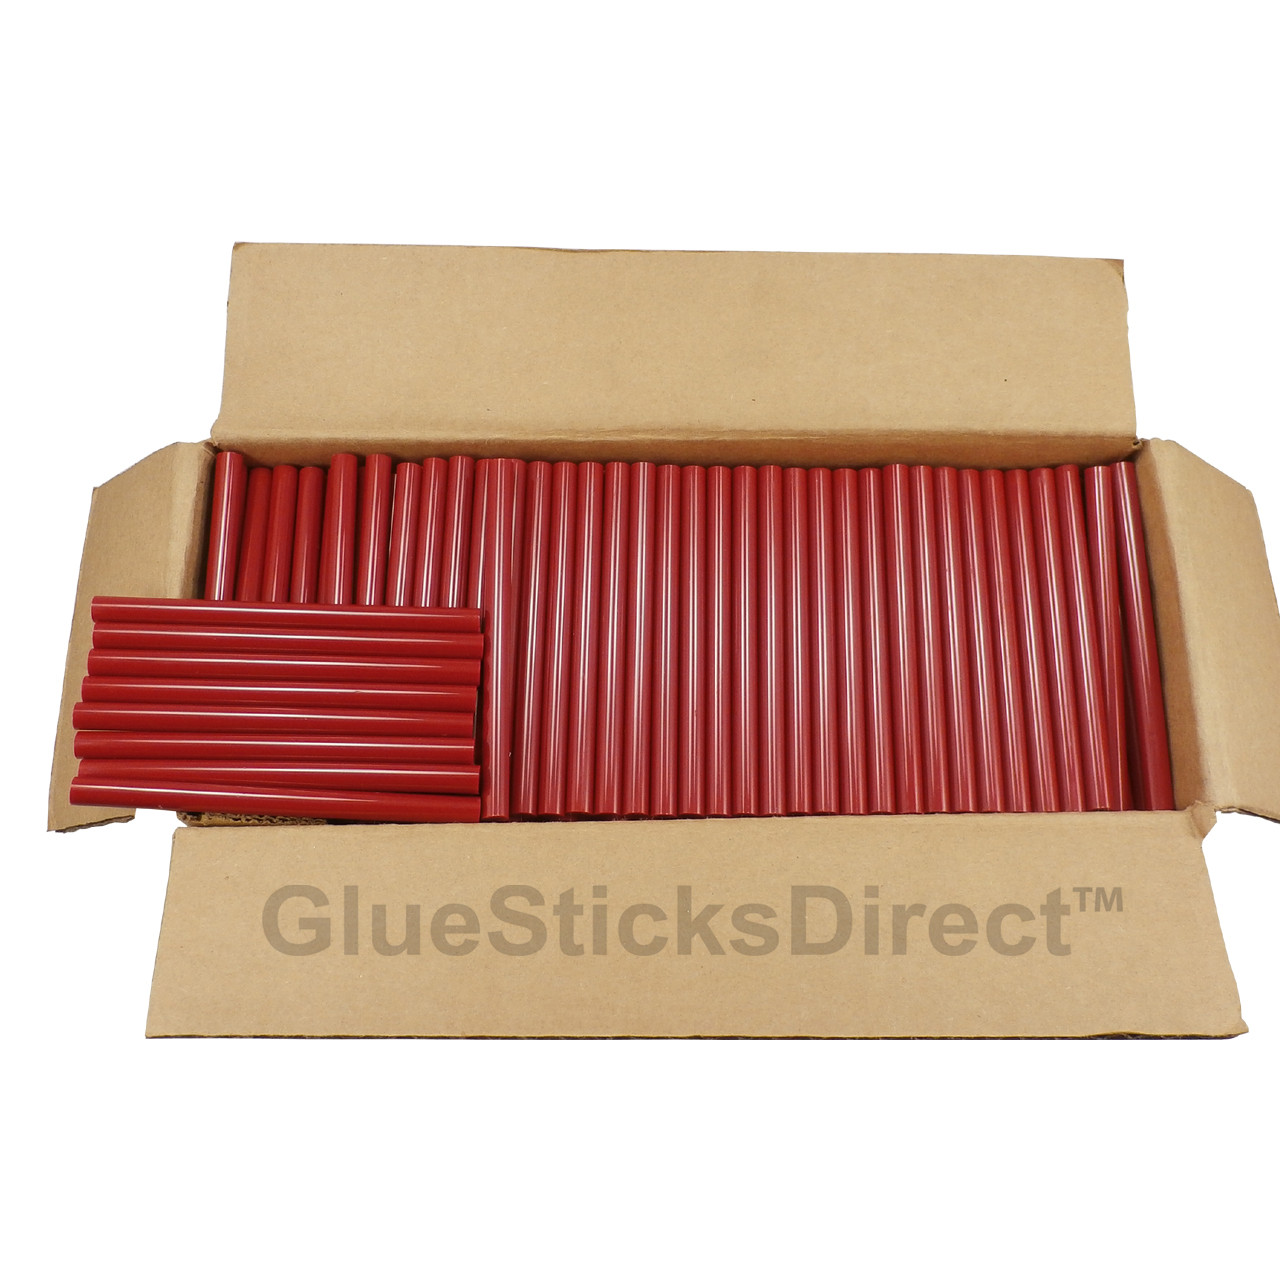 GlueSticksDirect Red Colored Glue Sticks 5/16 X 4 5 lbs